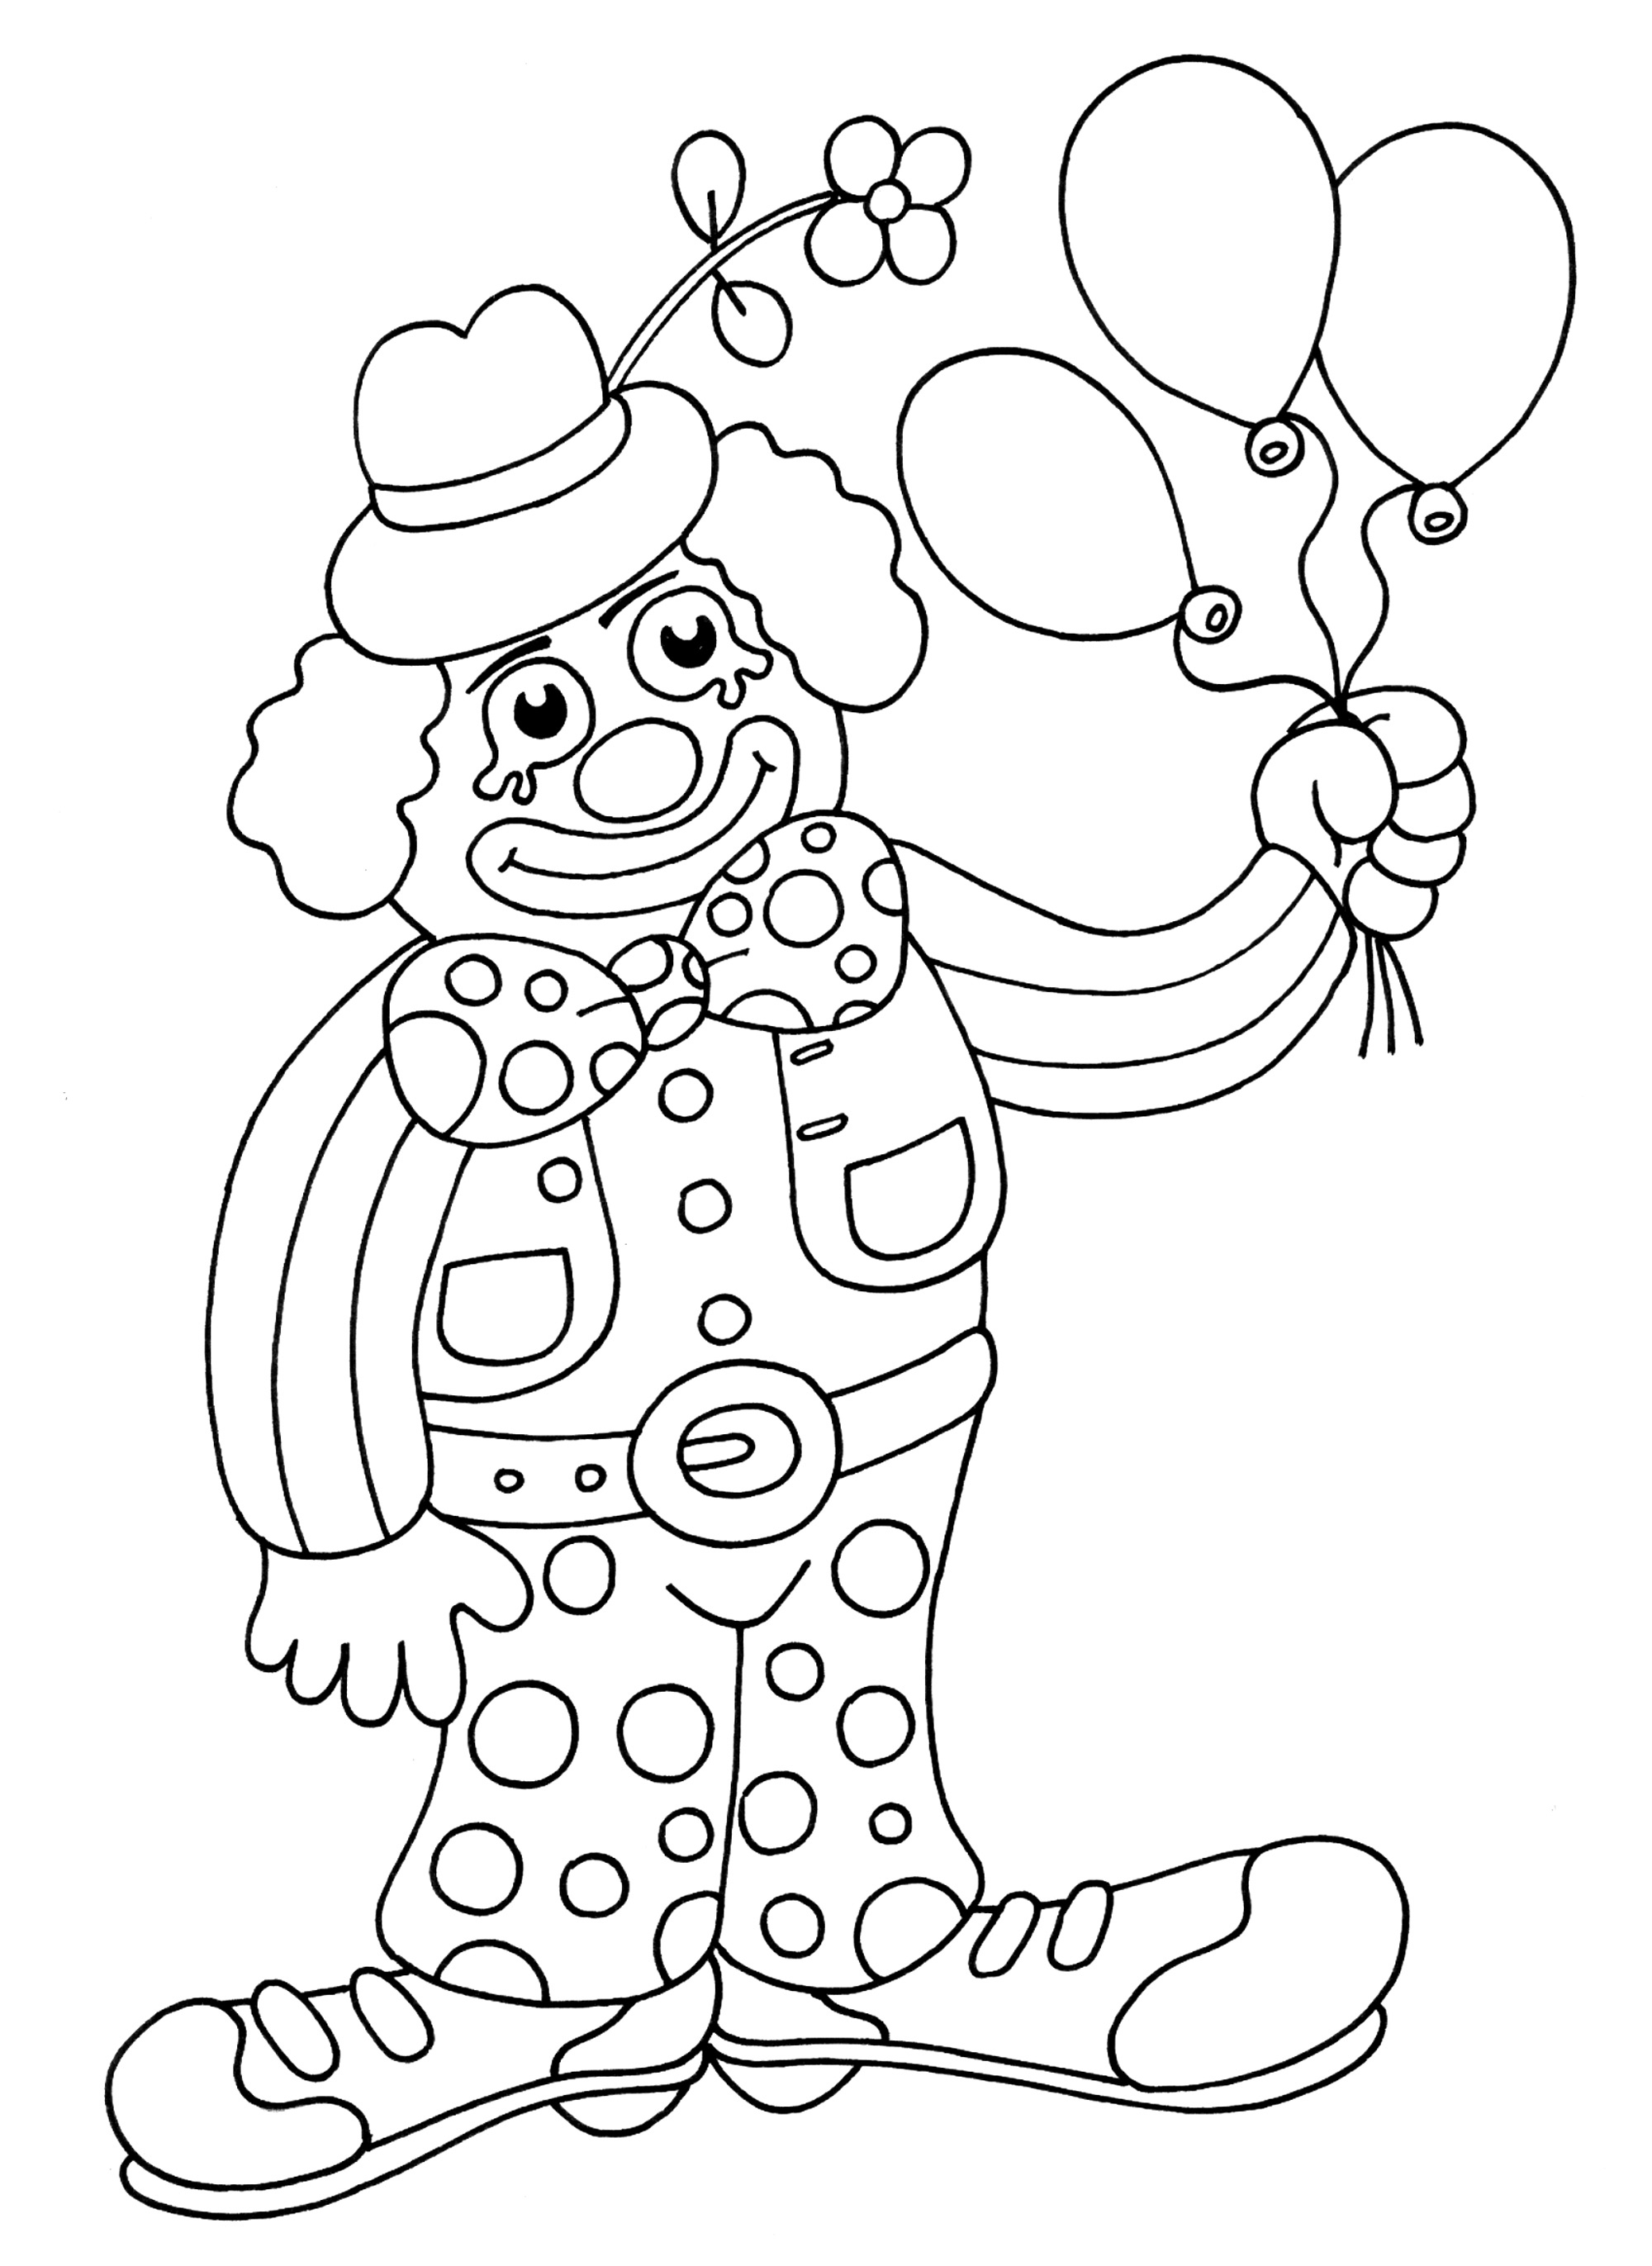 Клоун раскраска для детей 4 5. Клоун раскраска. Клоун раскраска для детей. Веселый клоун раскраска. Раскраска весёлый клоун для детей.